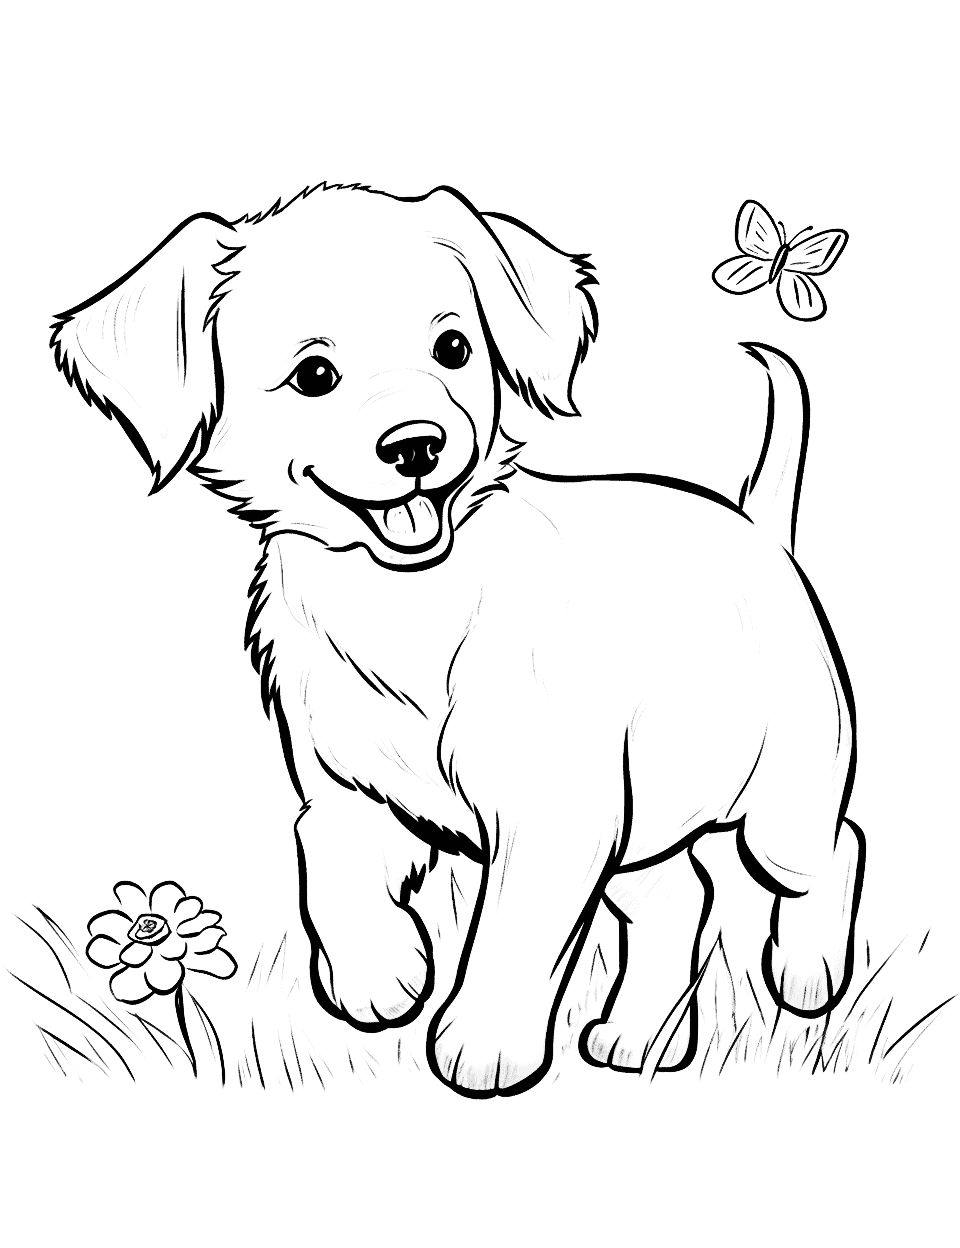 Playful Puppy Cute Golden Retriever Coloring Page - A Golden Retriever puppy playfully chasing a butterfly.